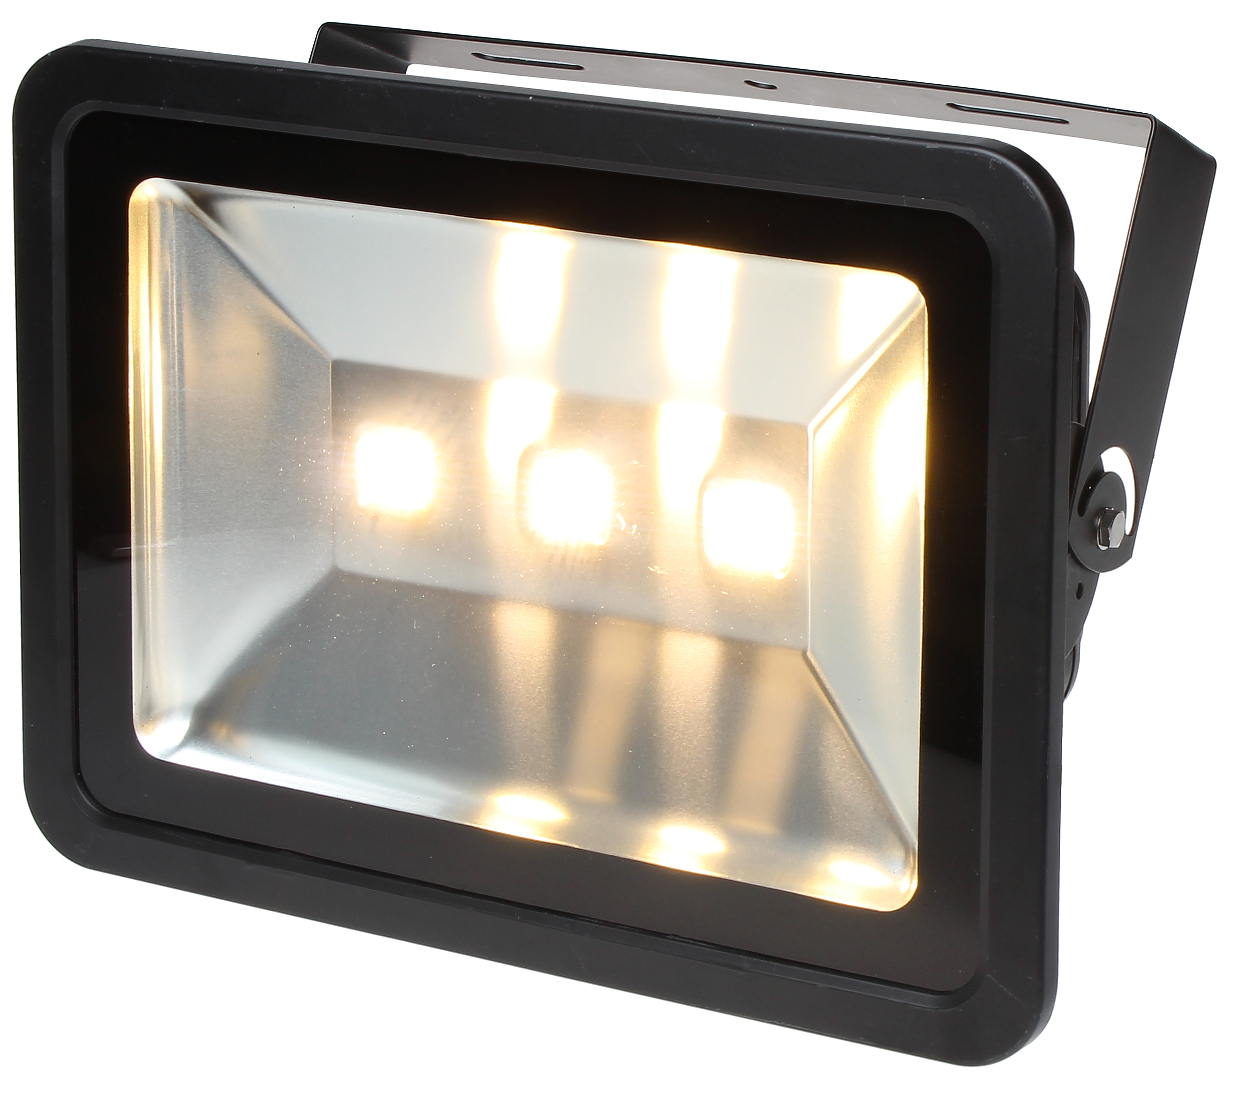 REFLECTOR LED NP-160W-SA-C - Reflectores (iluminadores) de luz blanca (LED)  con una... - Delta